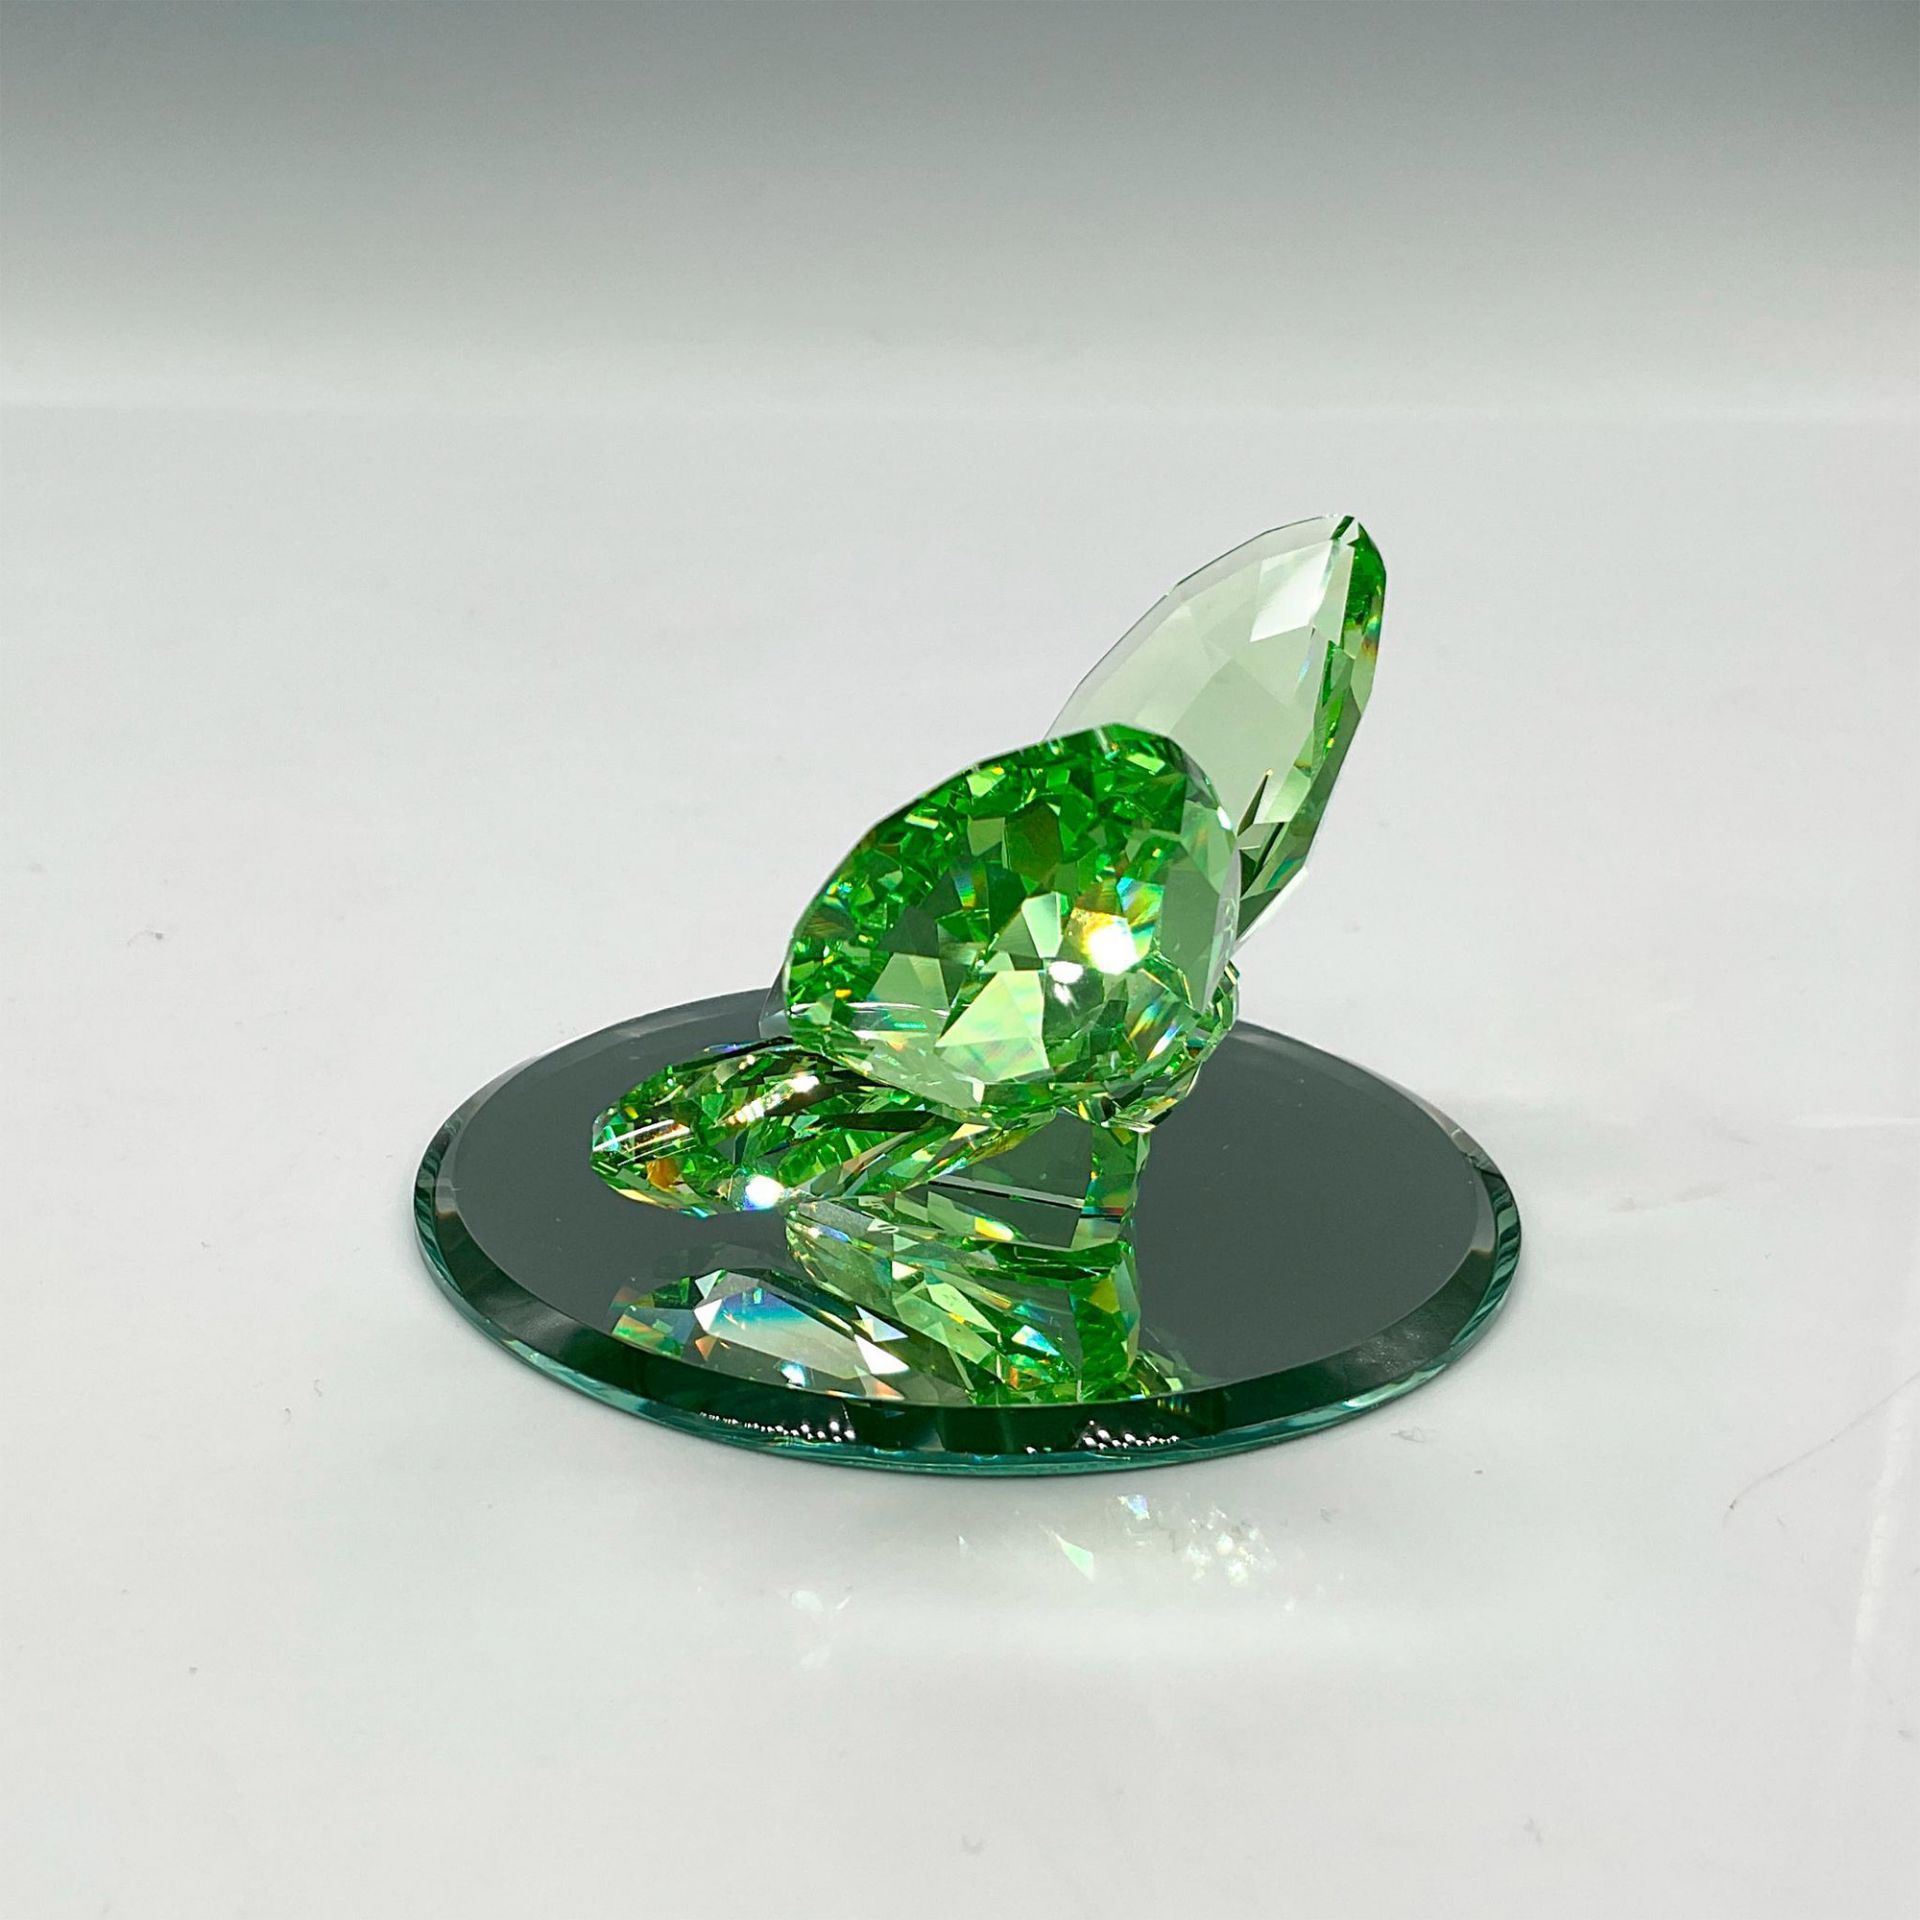 Swarovski Crystal Figurine, Brilliant Butterfly - Image 2 of 4